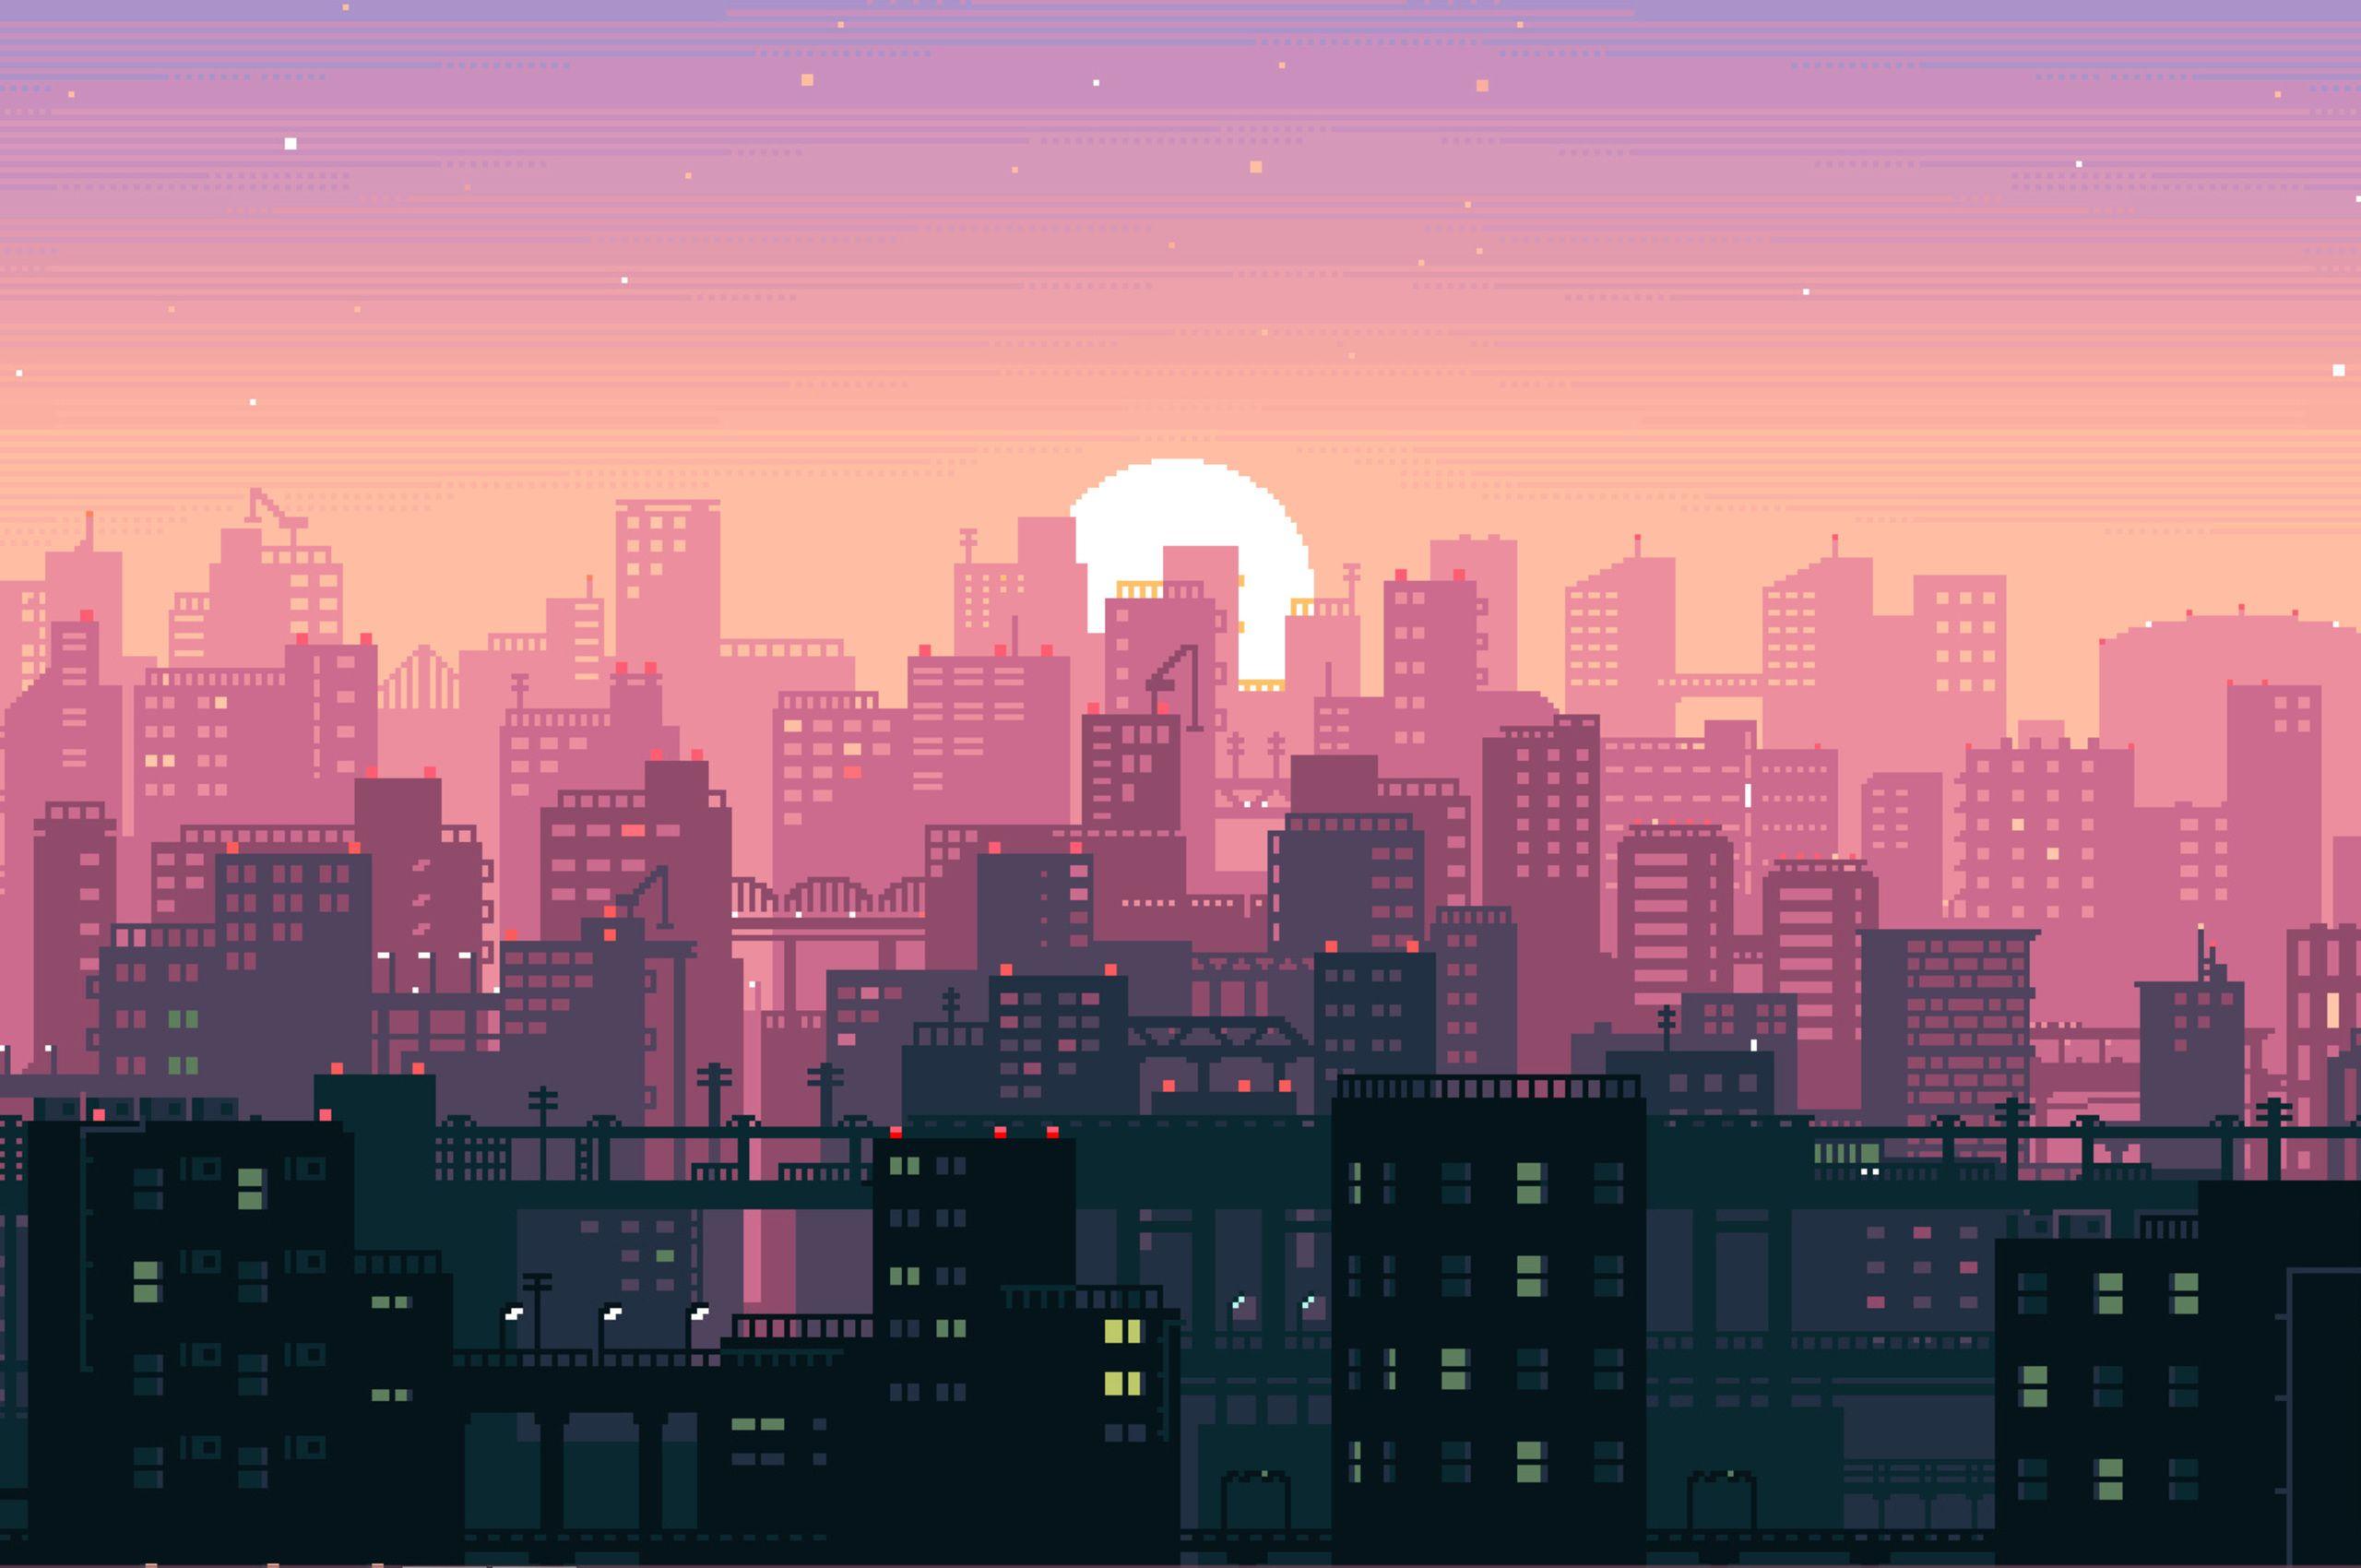 8 Bit Sunset [2560x1700]. Aesthetic Desktop Wallpaper, Desktop Wallpaper Art, Pixel Art Background